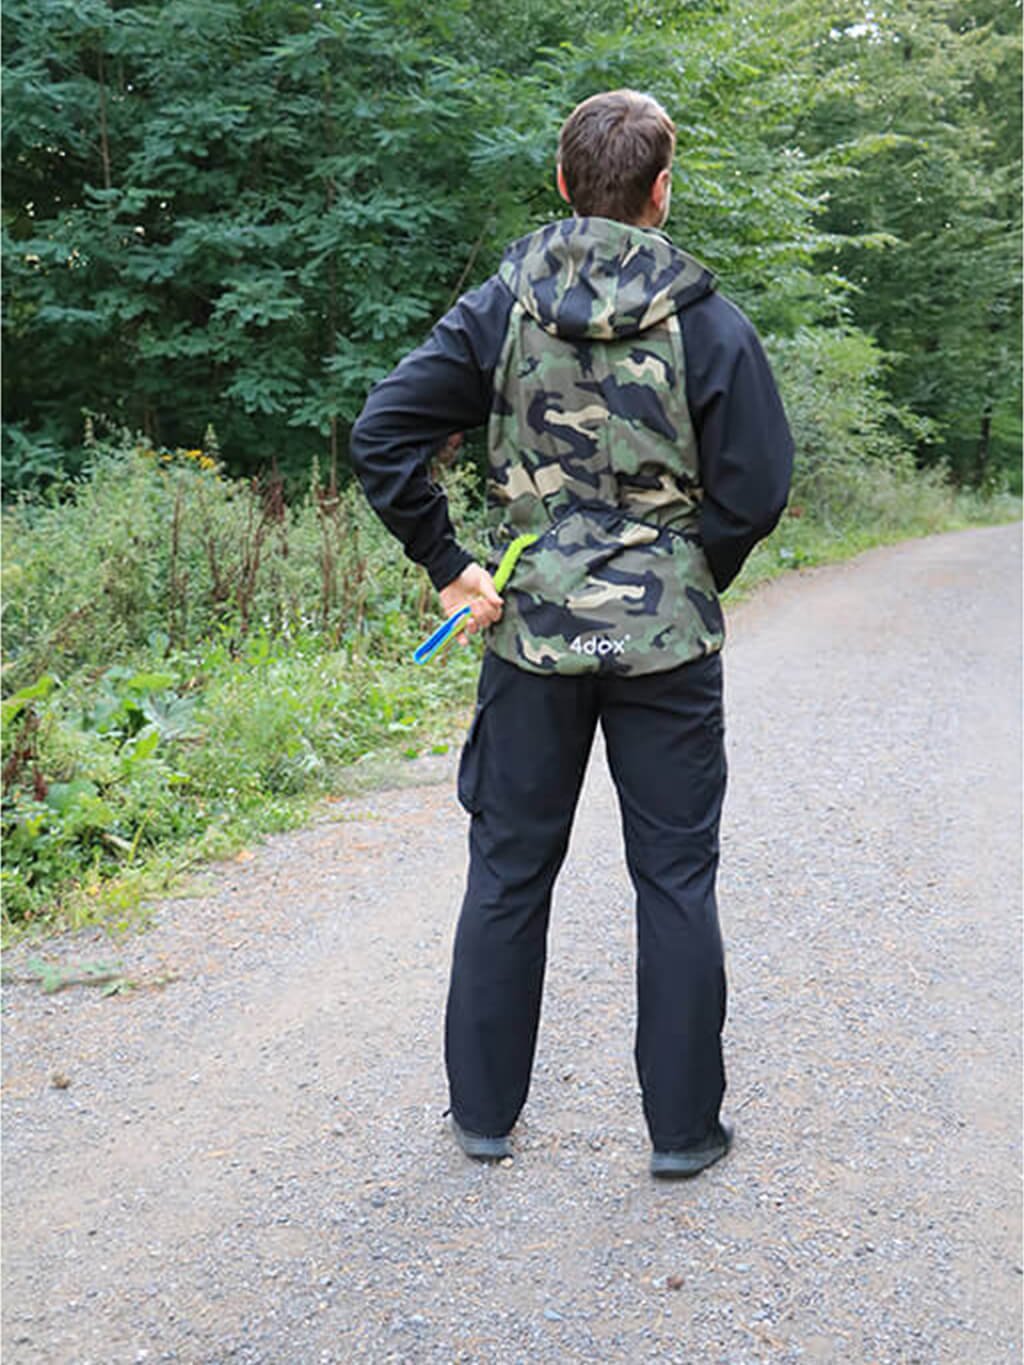 Men's training jacket 2in1 camouflage 4dox